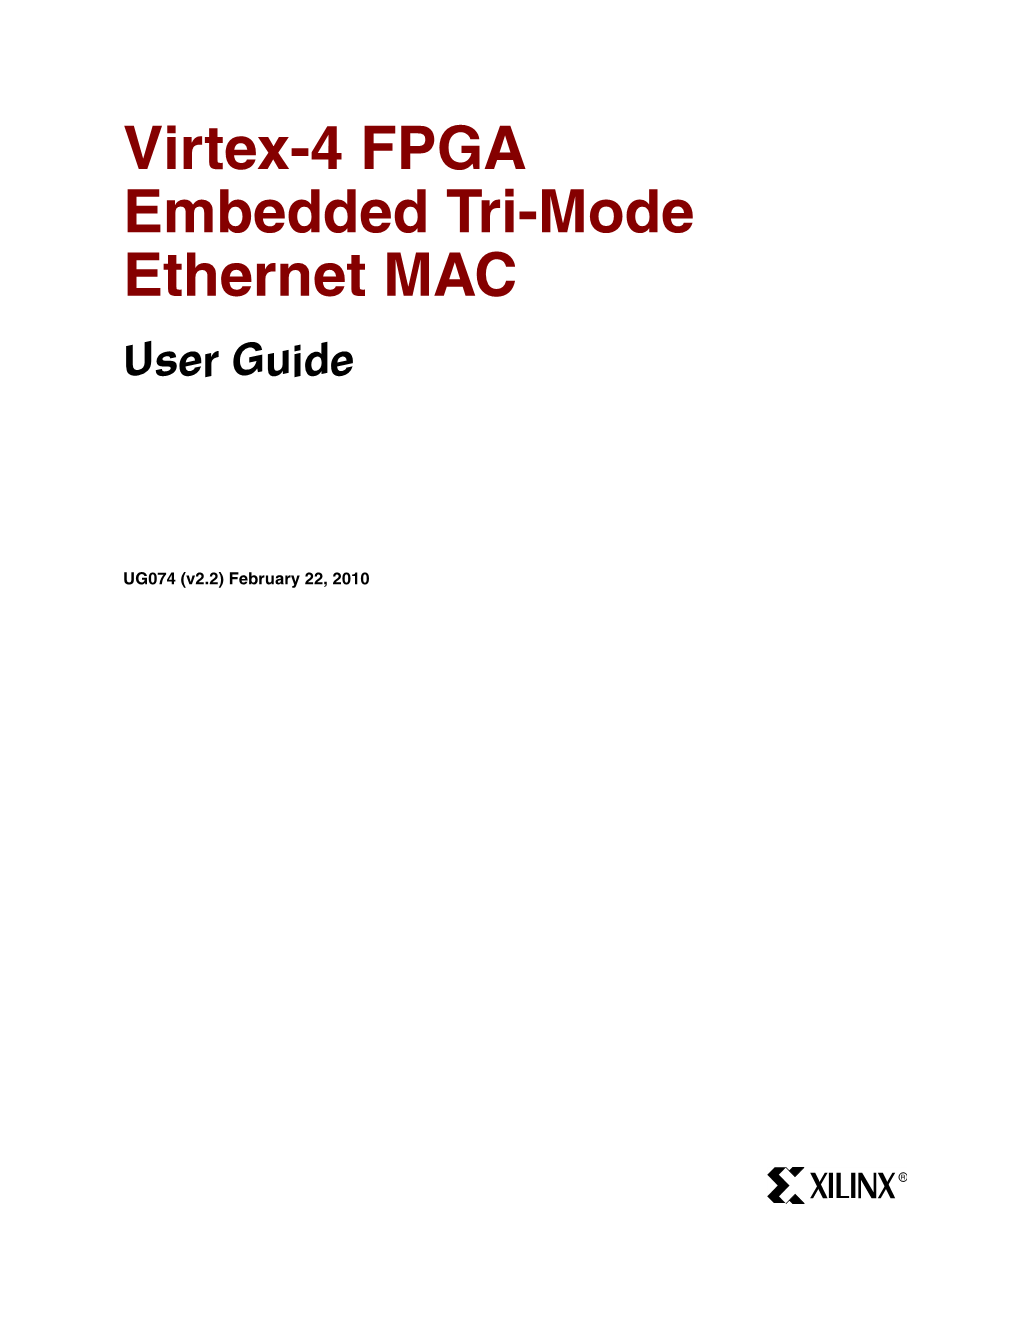 Xilinx UG074 Virtex-4 FPGA Embedded Tri-Mode Ethernet MAC, User Guide